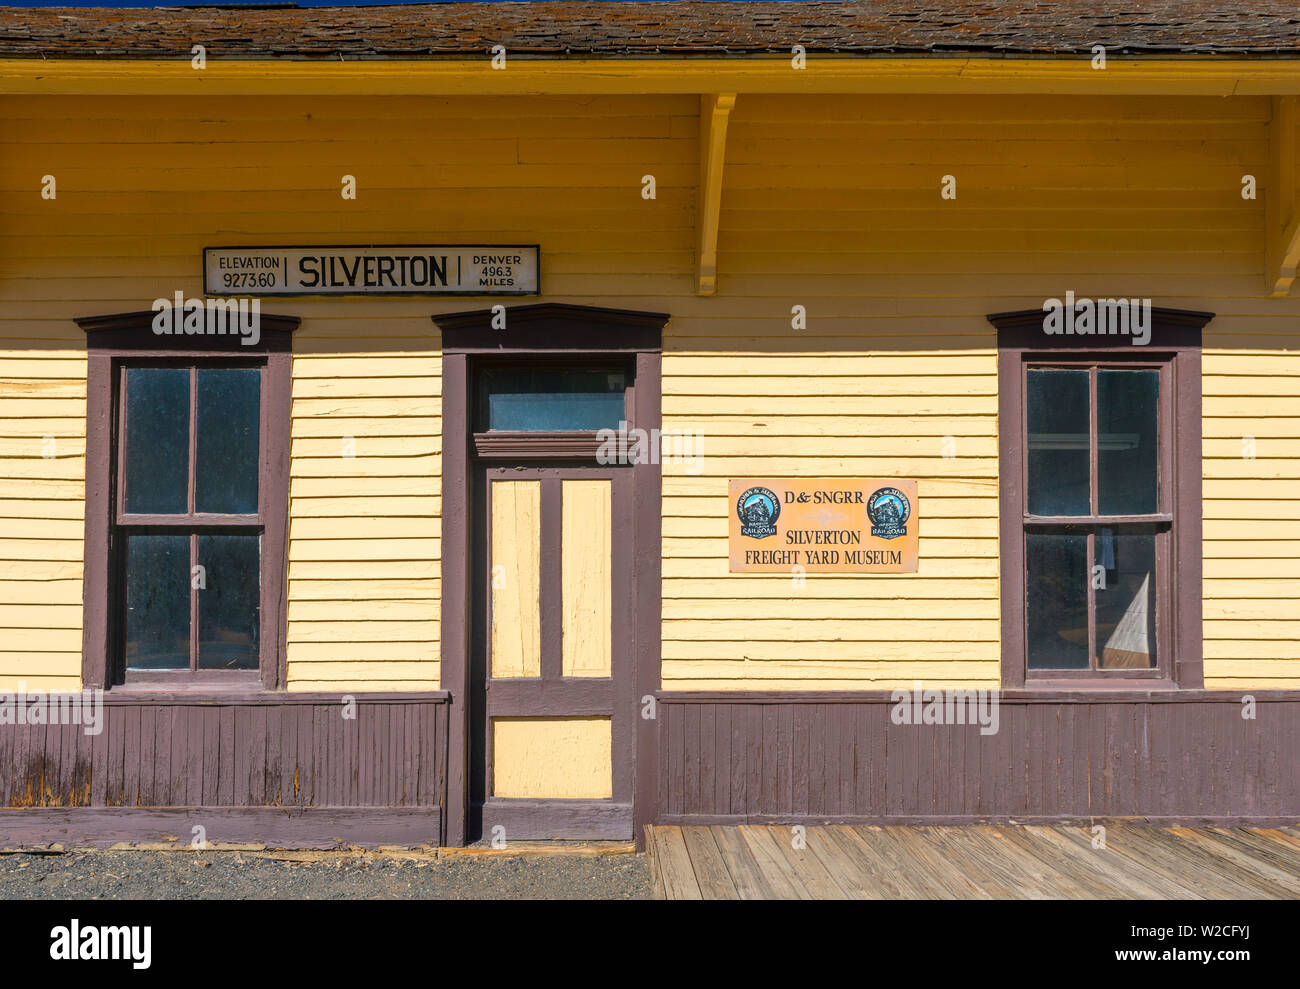 USA, Colorado, Silverton, Railway Station for Durango and Silverton Narrow Gauge Railroad Stock Photo